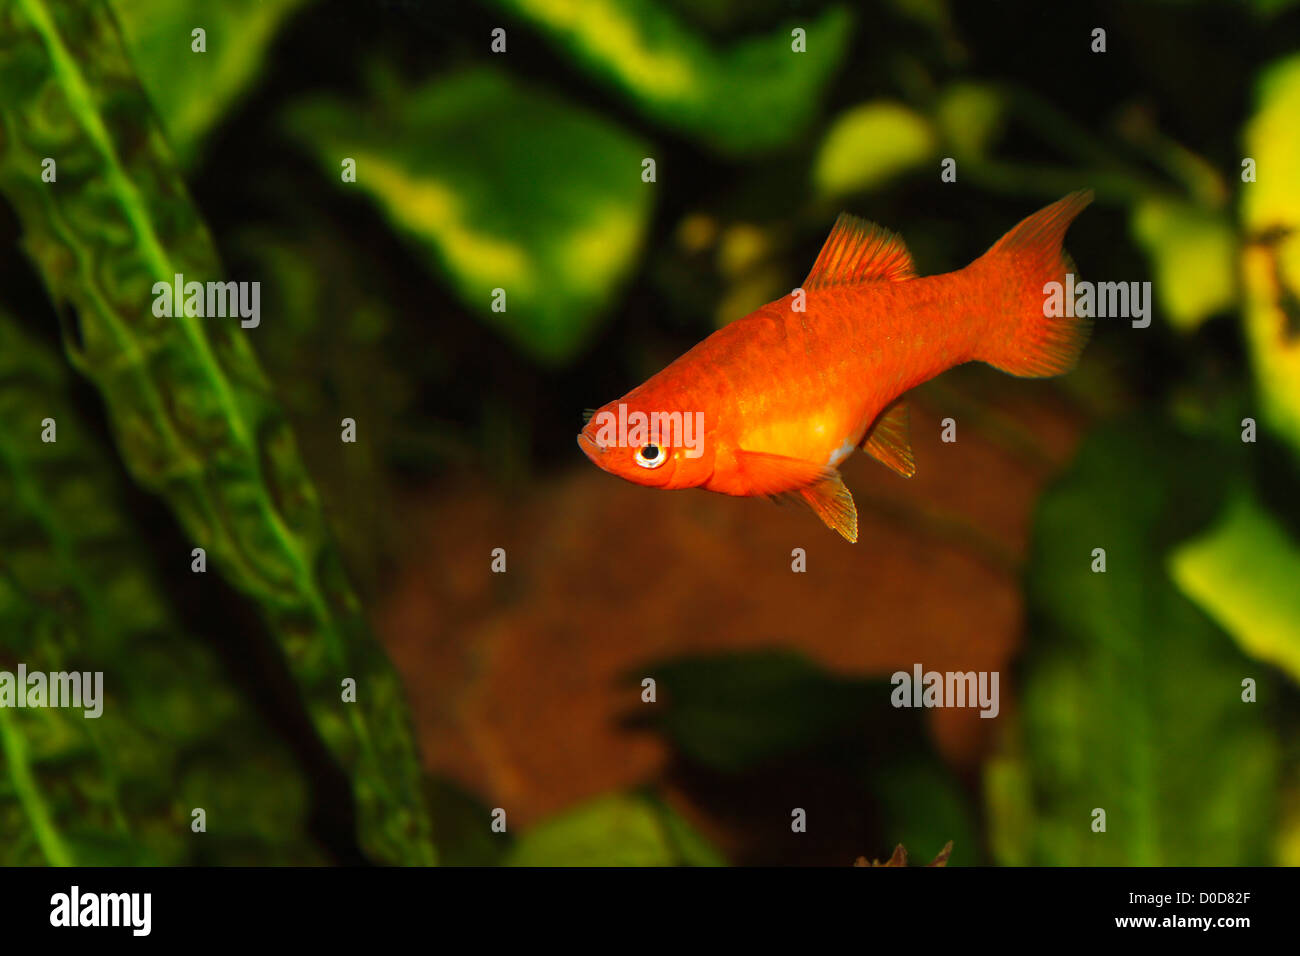 Freshwater fish aquarium hi-res stock photography and images - Alamy